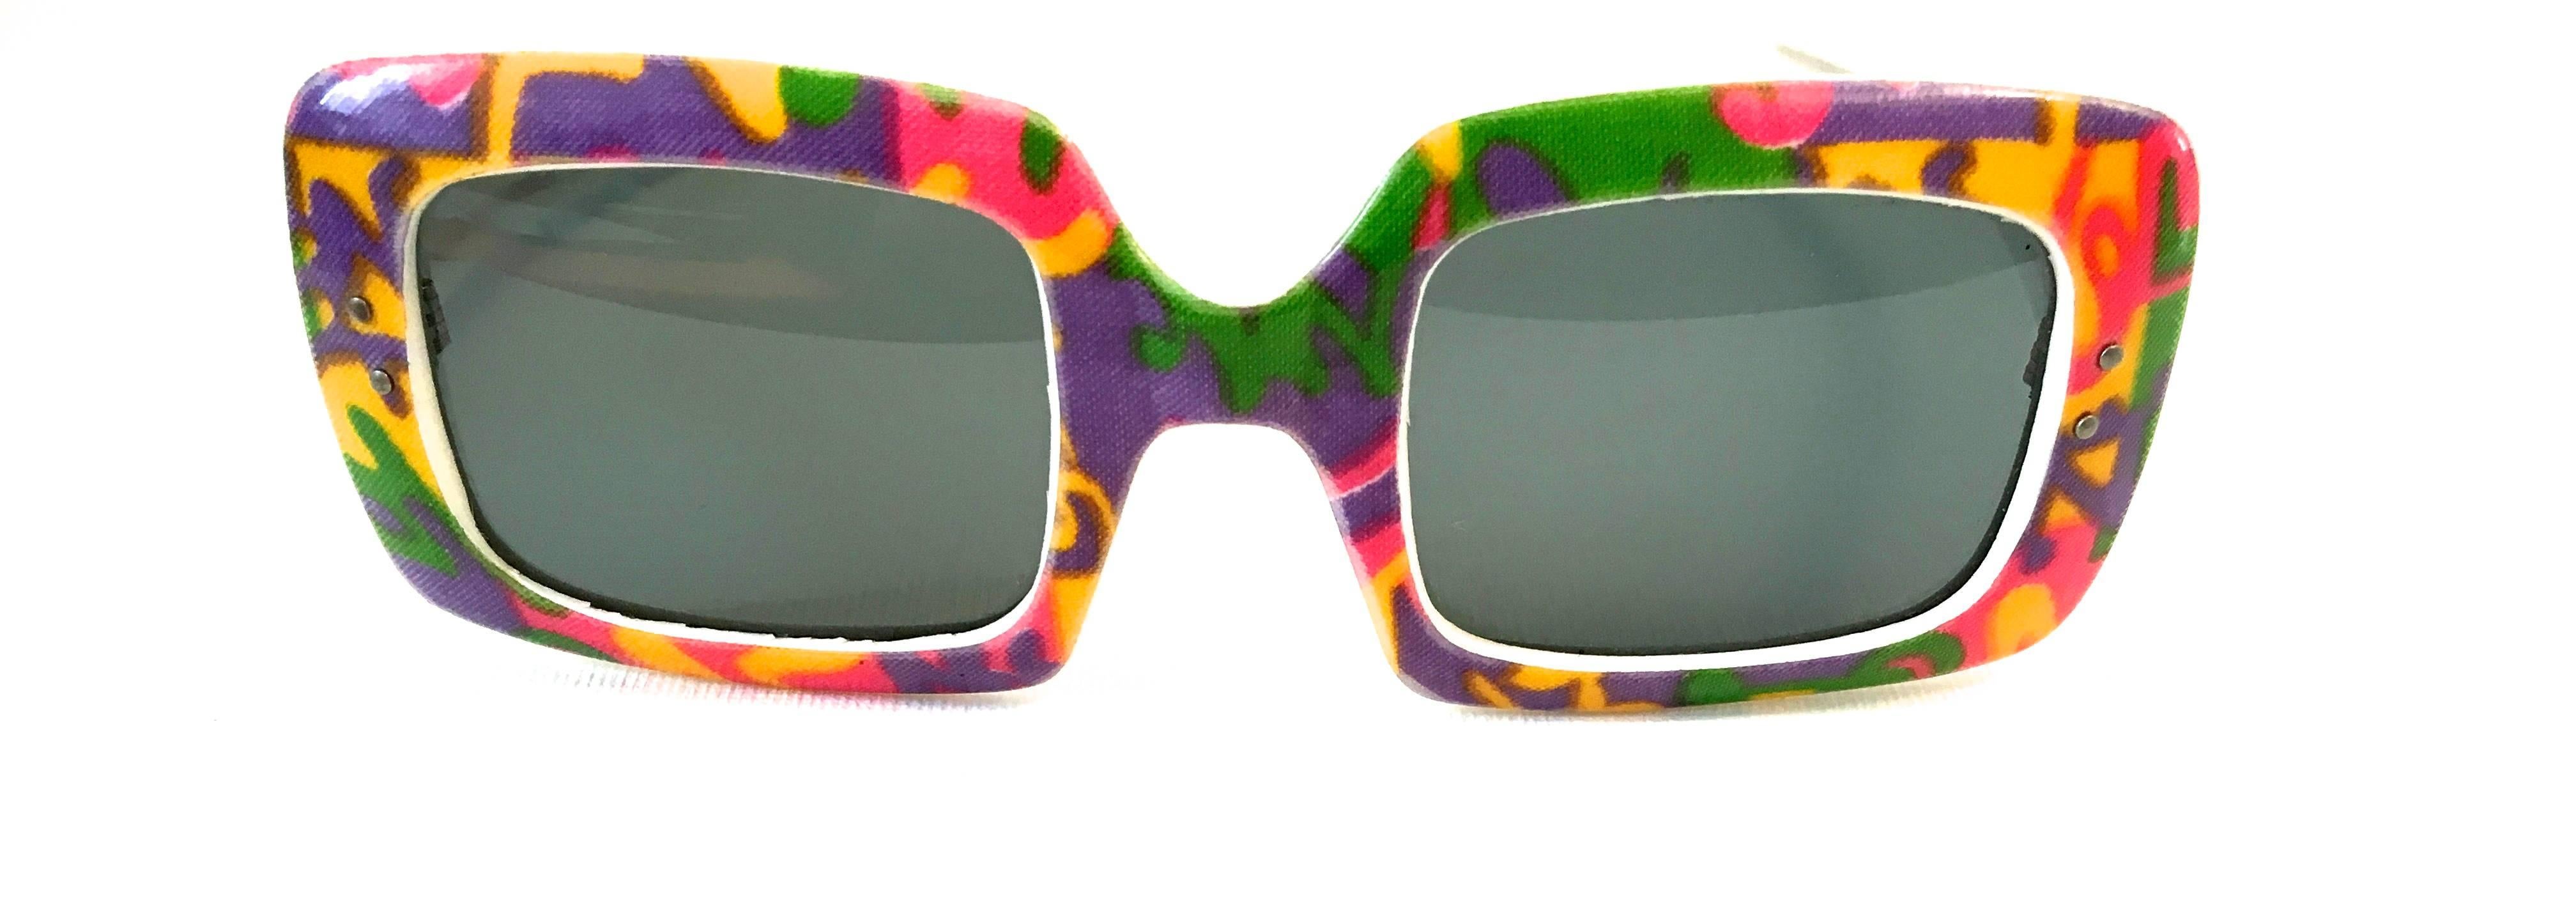 Gray Mod 1960's Sunglasses - Psychadelic Design For Sale